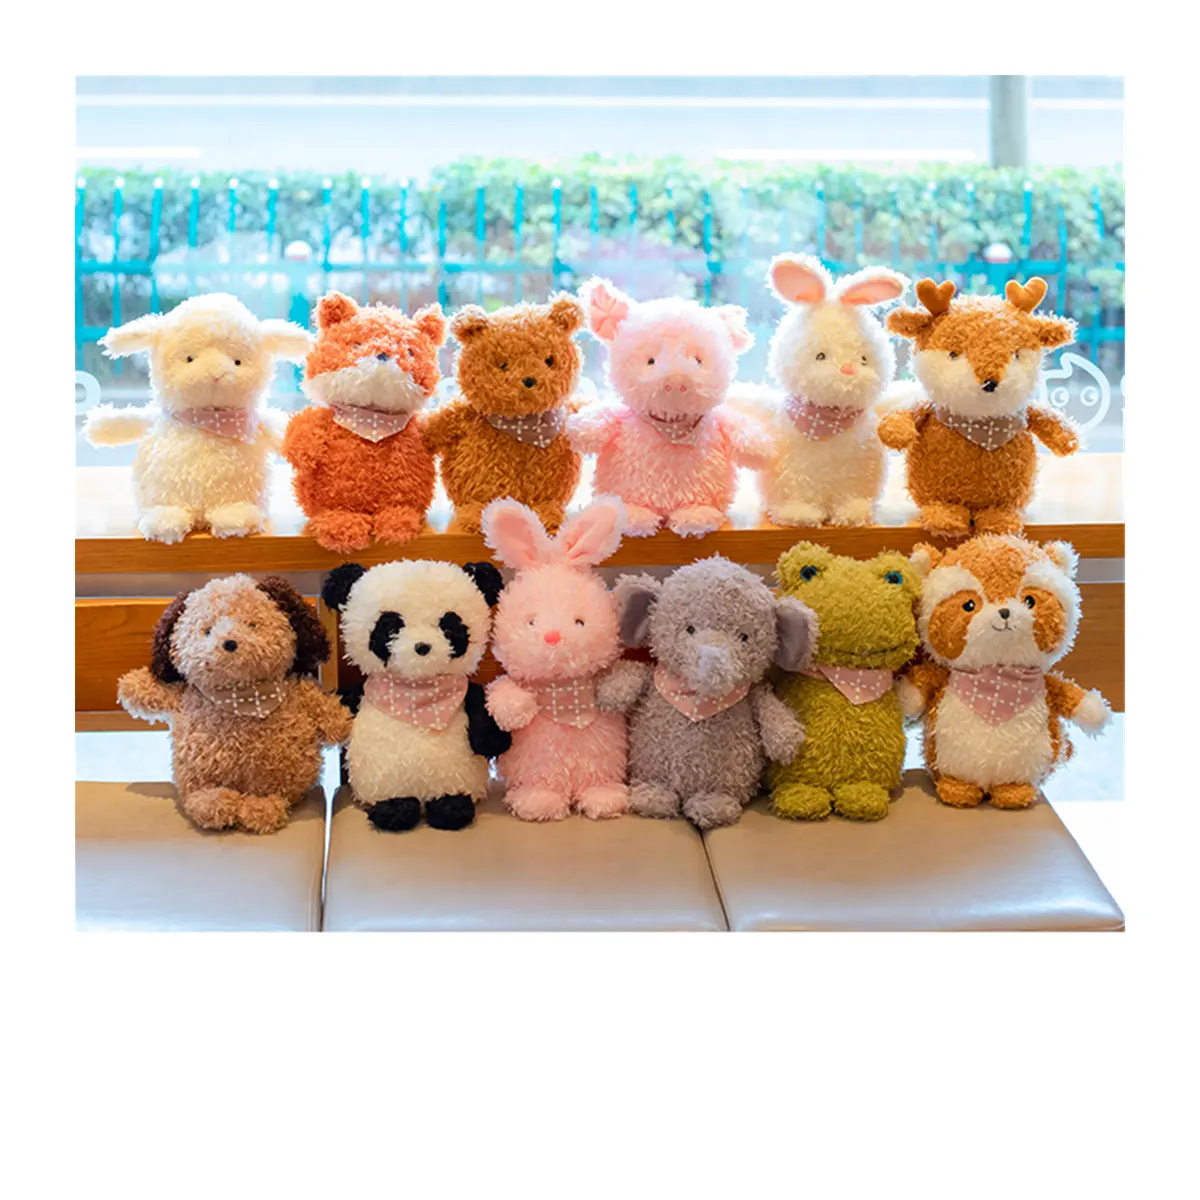 Mainan mewah hewan hutan lembut dan manis lucu Harga Murah berbagai boneka pendamping anak-anak hewan berbulu disesuaikan ukuran baru